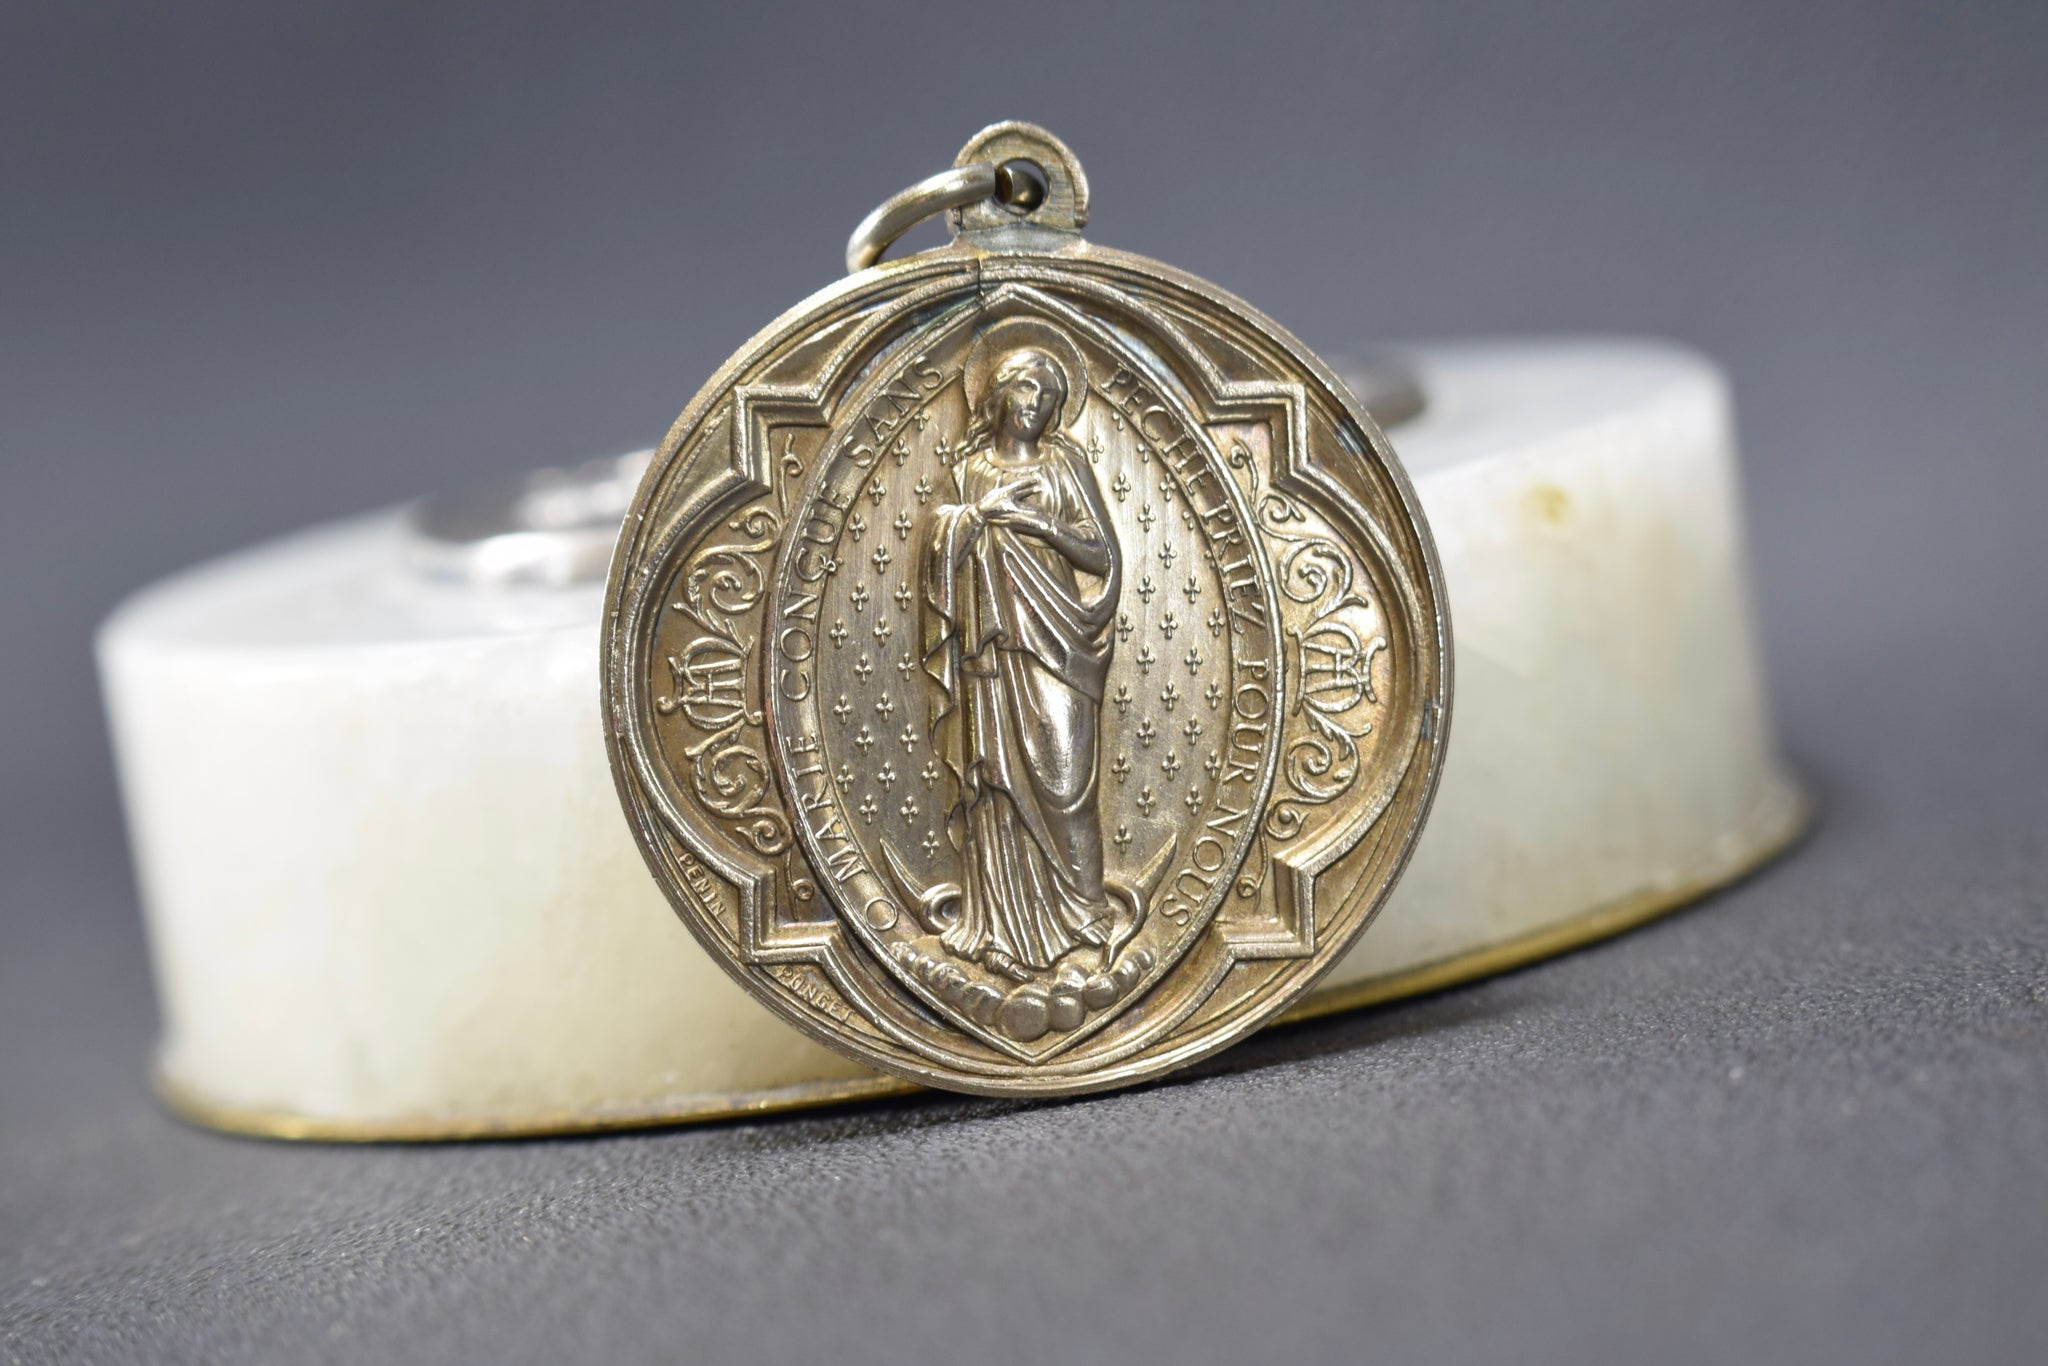 Blessed Virgin Mary Medal by Penin